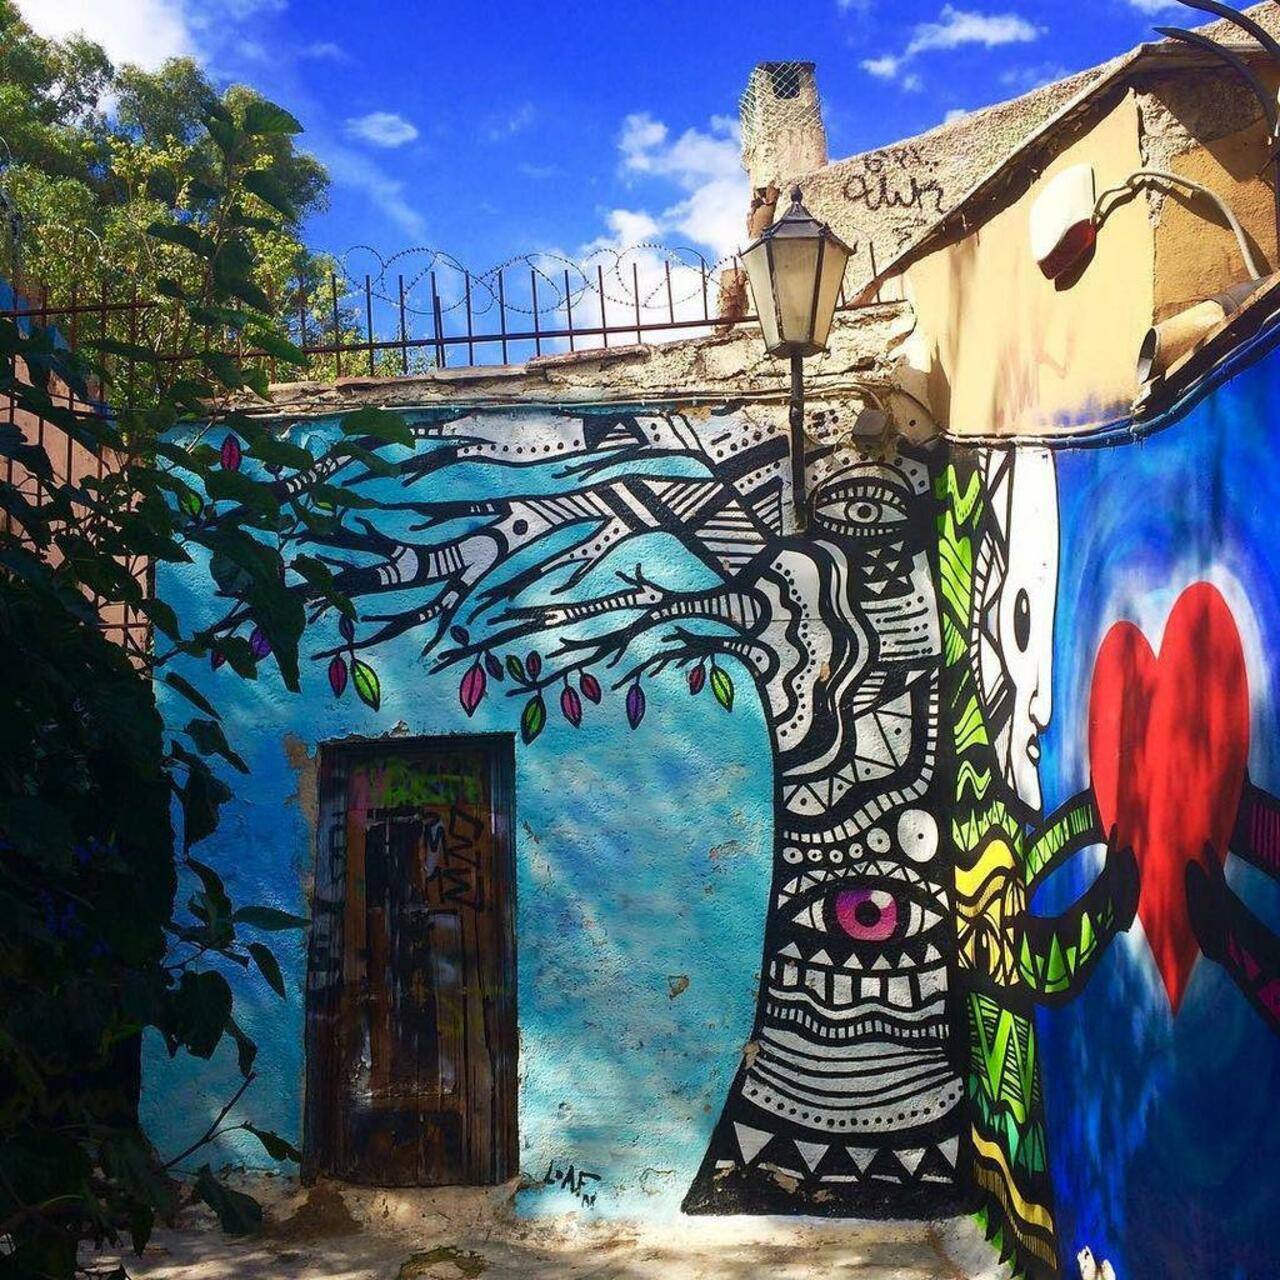 RT http://twitter.com/AthensInsta/status/652370390027792384 #athens #greece #travel #graffiti #streetart #colors #plaka #plakaathens by efcikkk … http://t.co/sOebMoqjMD